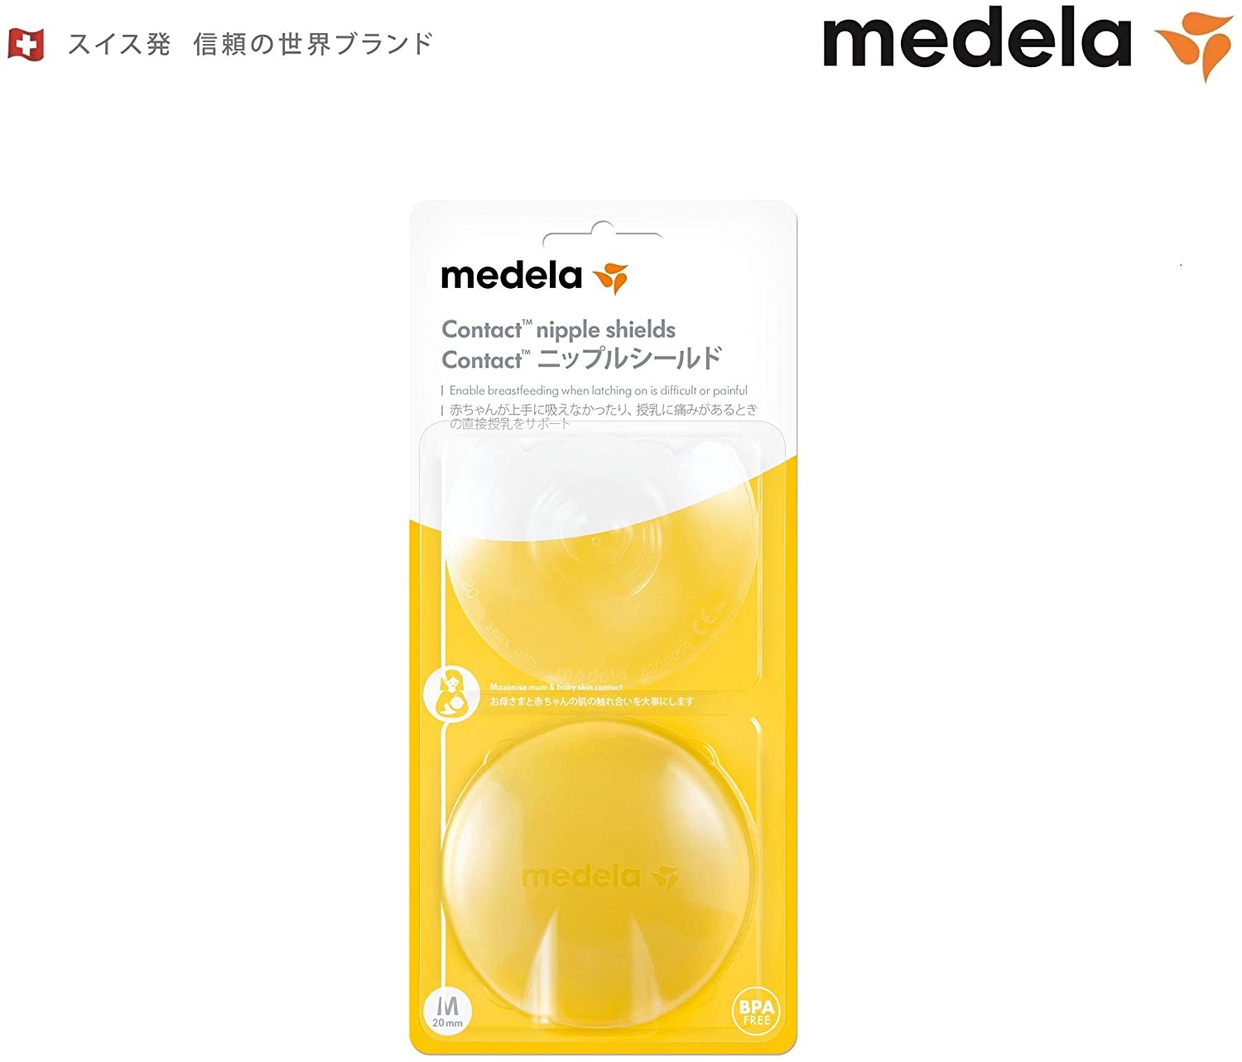 medela(メデラ) コンタクトニップルシールドの商品画像3 